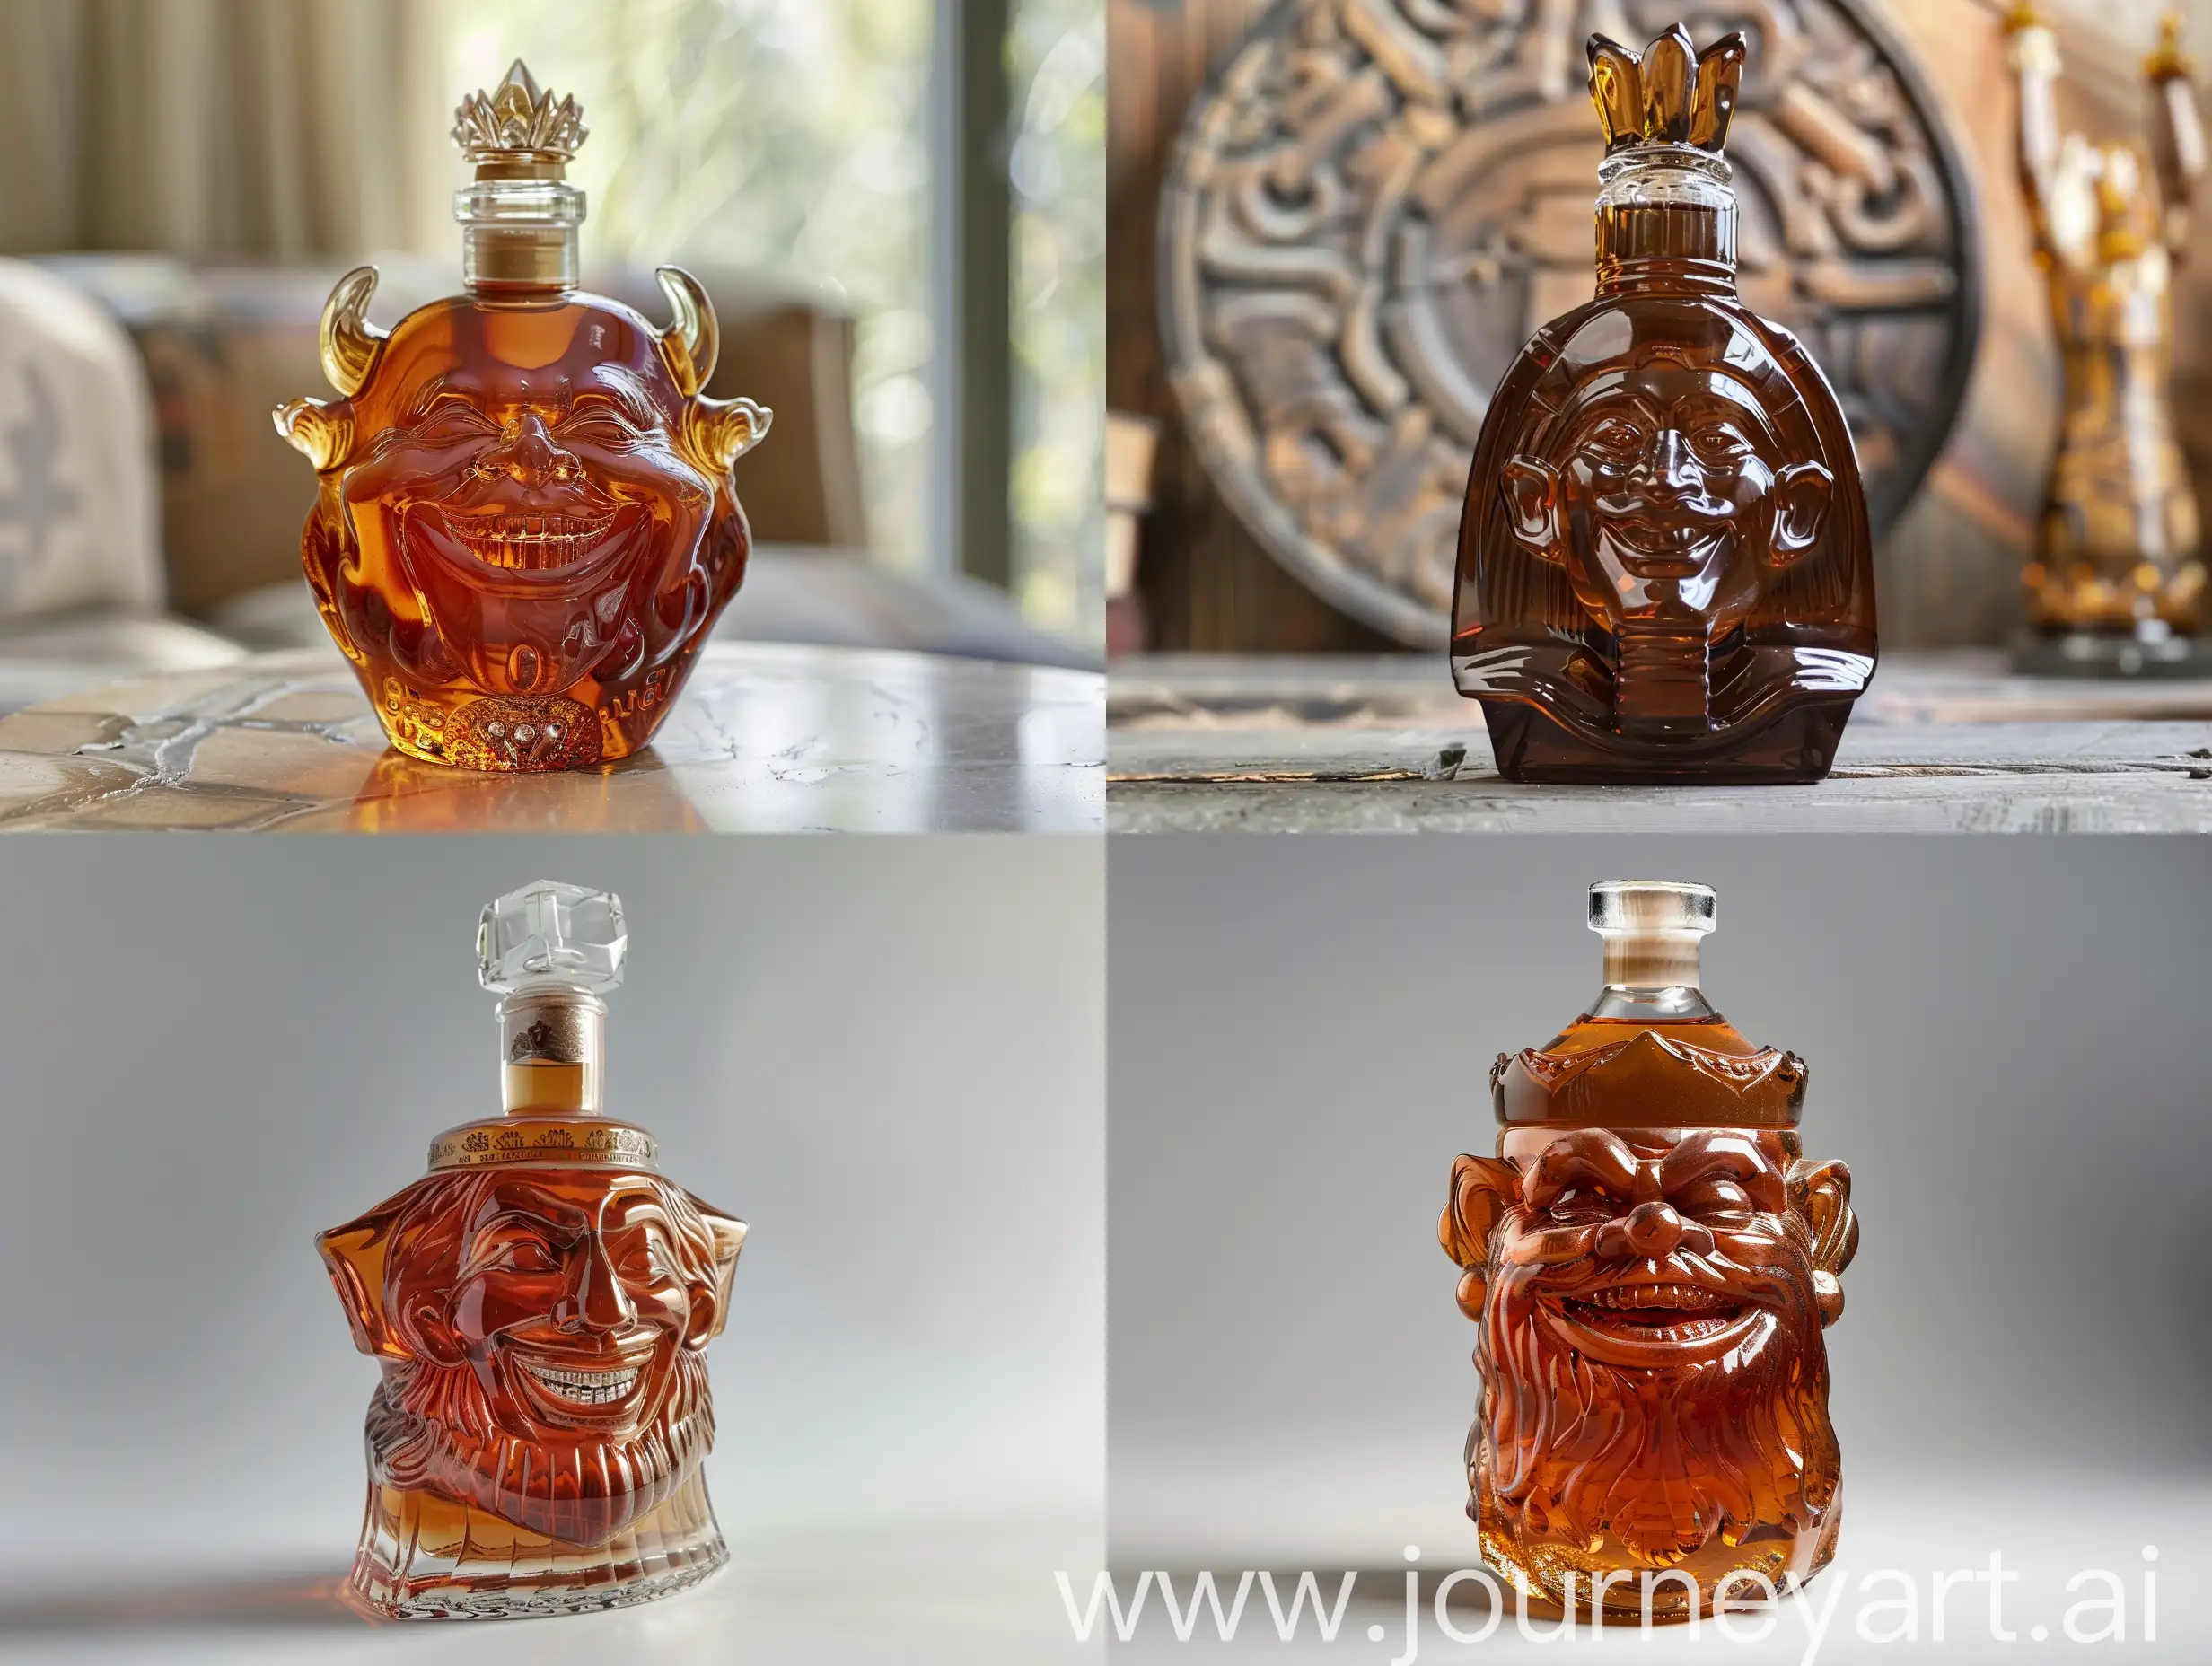 Smiling-King-Glass-Sculpture-Cognac-Bottle-Art